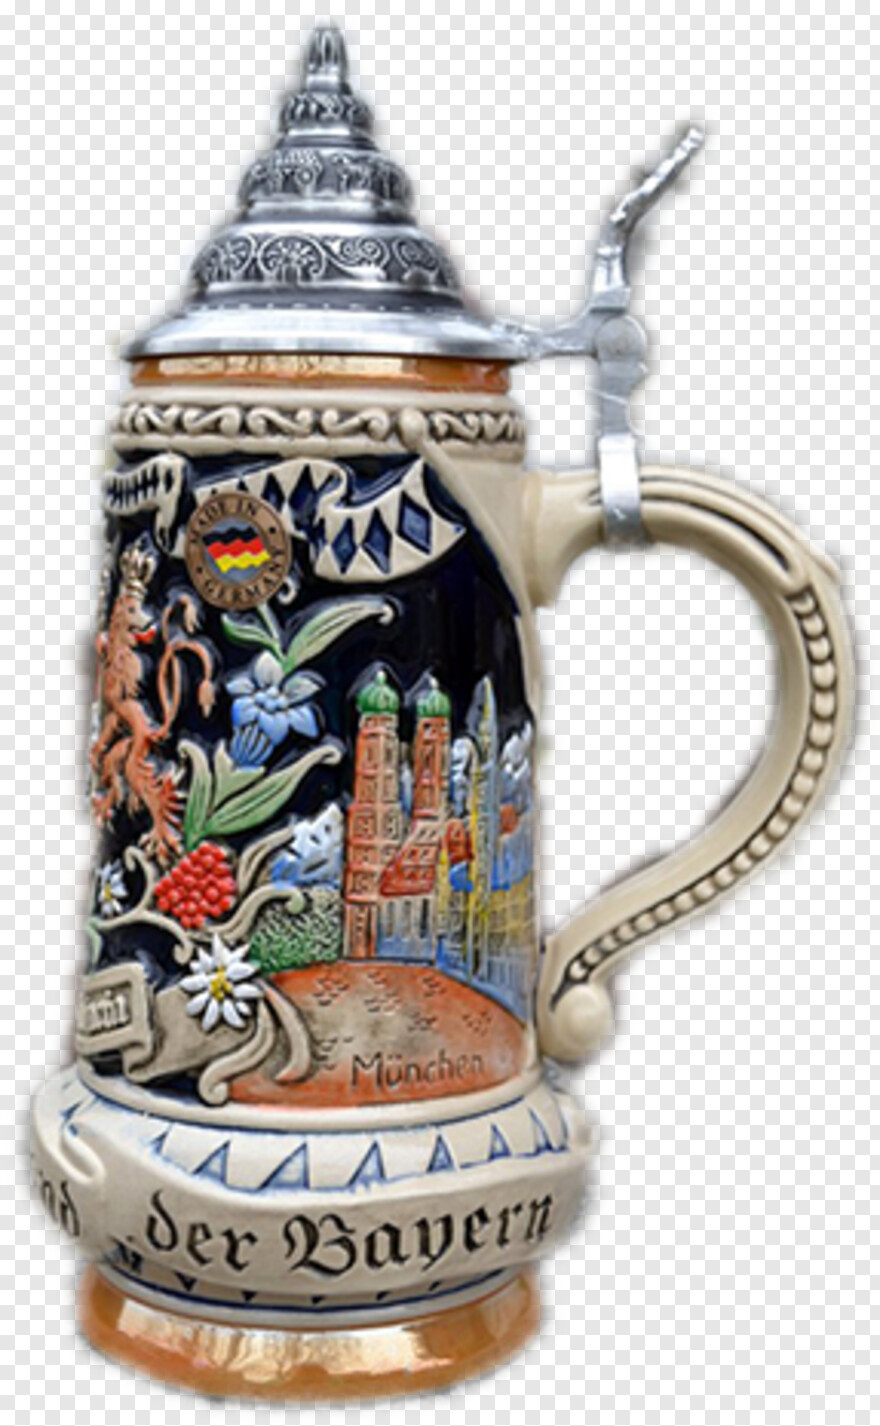  Beer Mug Clip Art, Beer Can, Modelo Beer, Beer Glass, Beer Bottle Vector, Beer